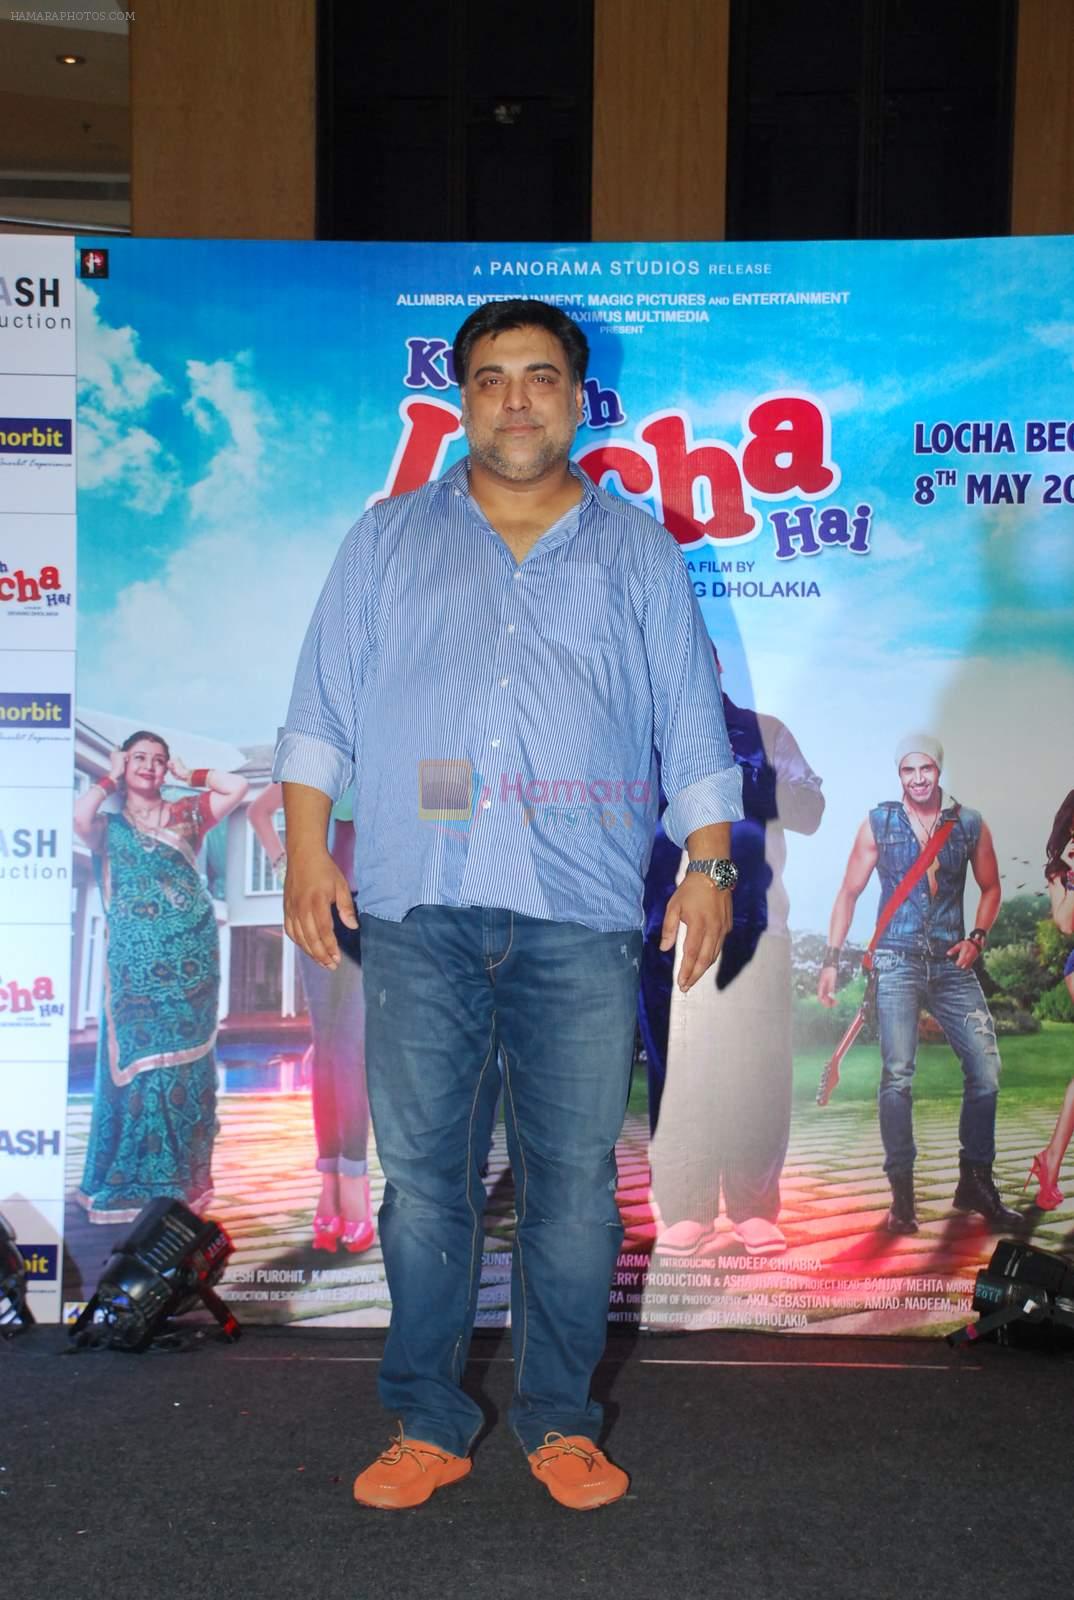 Ram Kapoor at Kuch Kuch Locha hain promotions in Mumbai on 25th April 2015